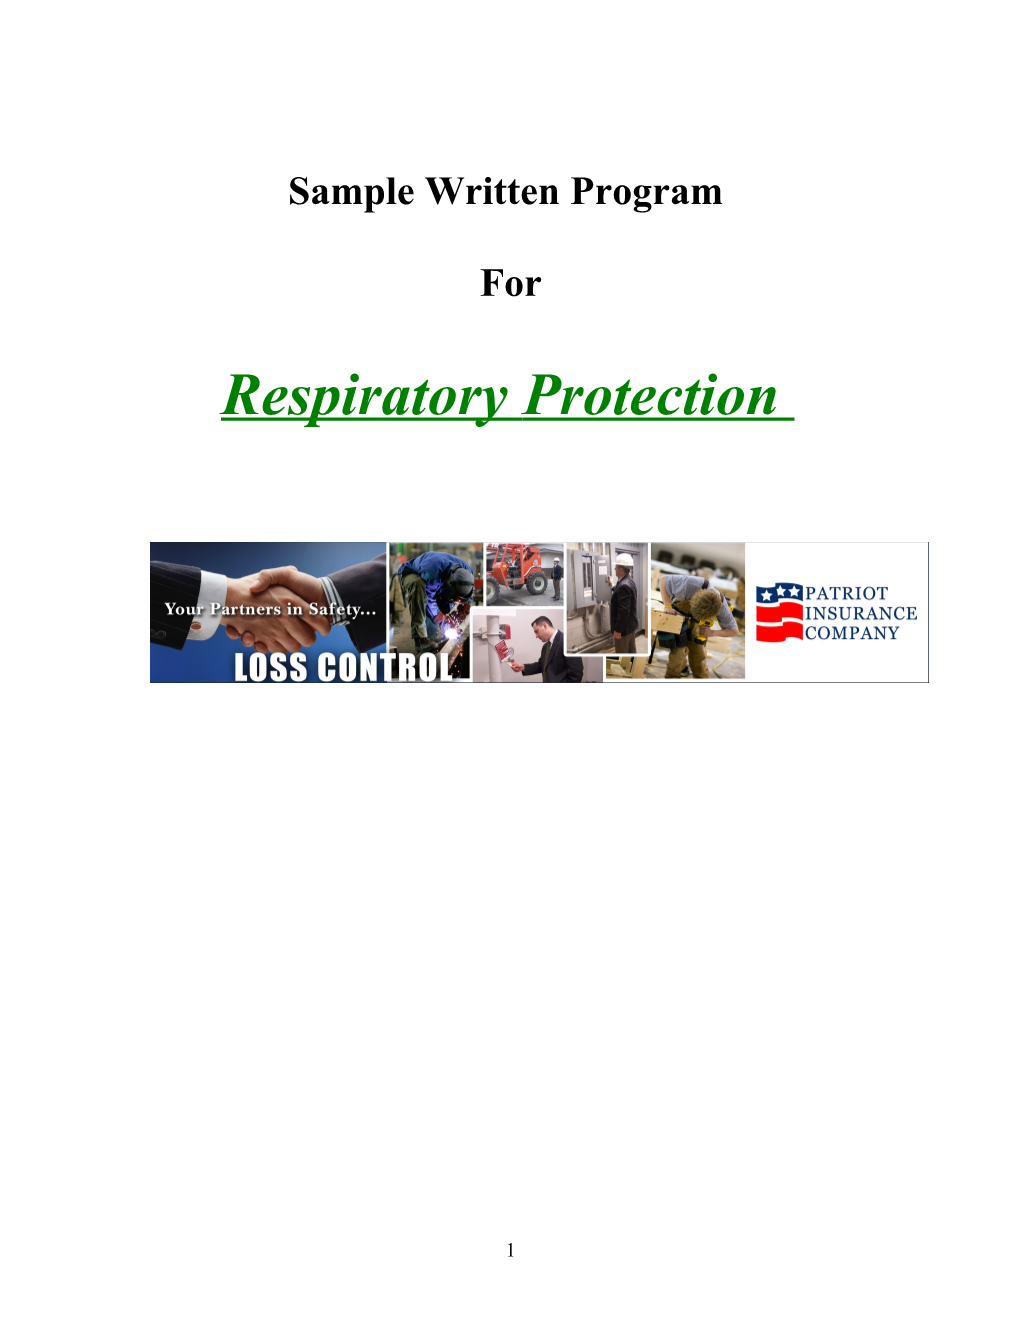 Sample Respiratory Protection Program (CET 5730)